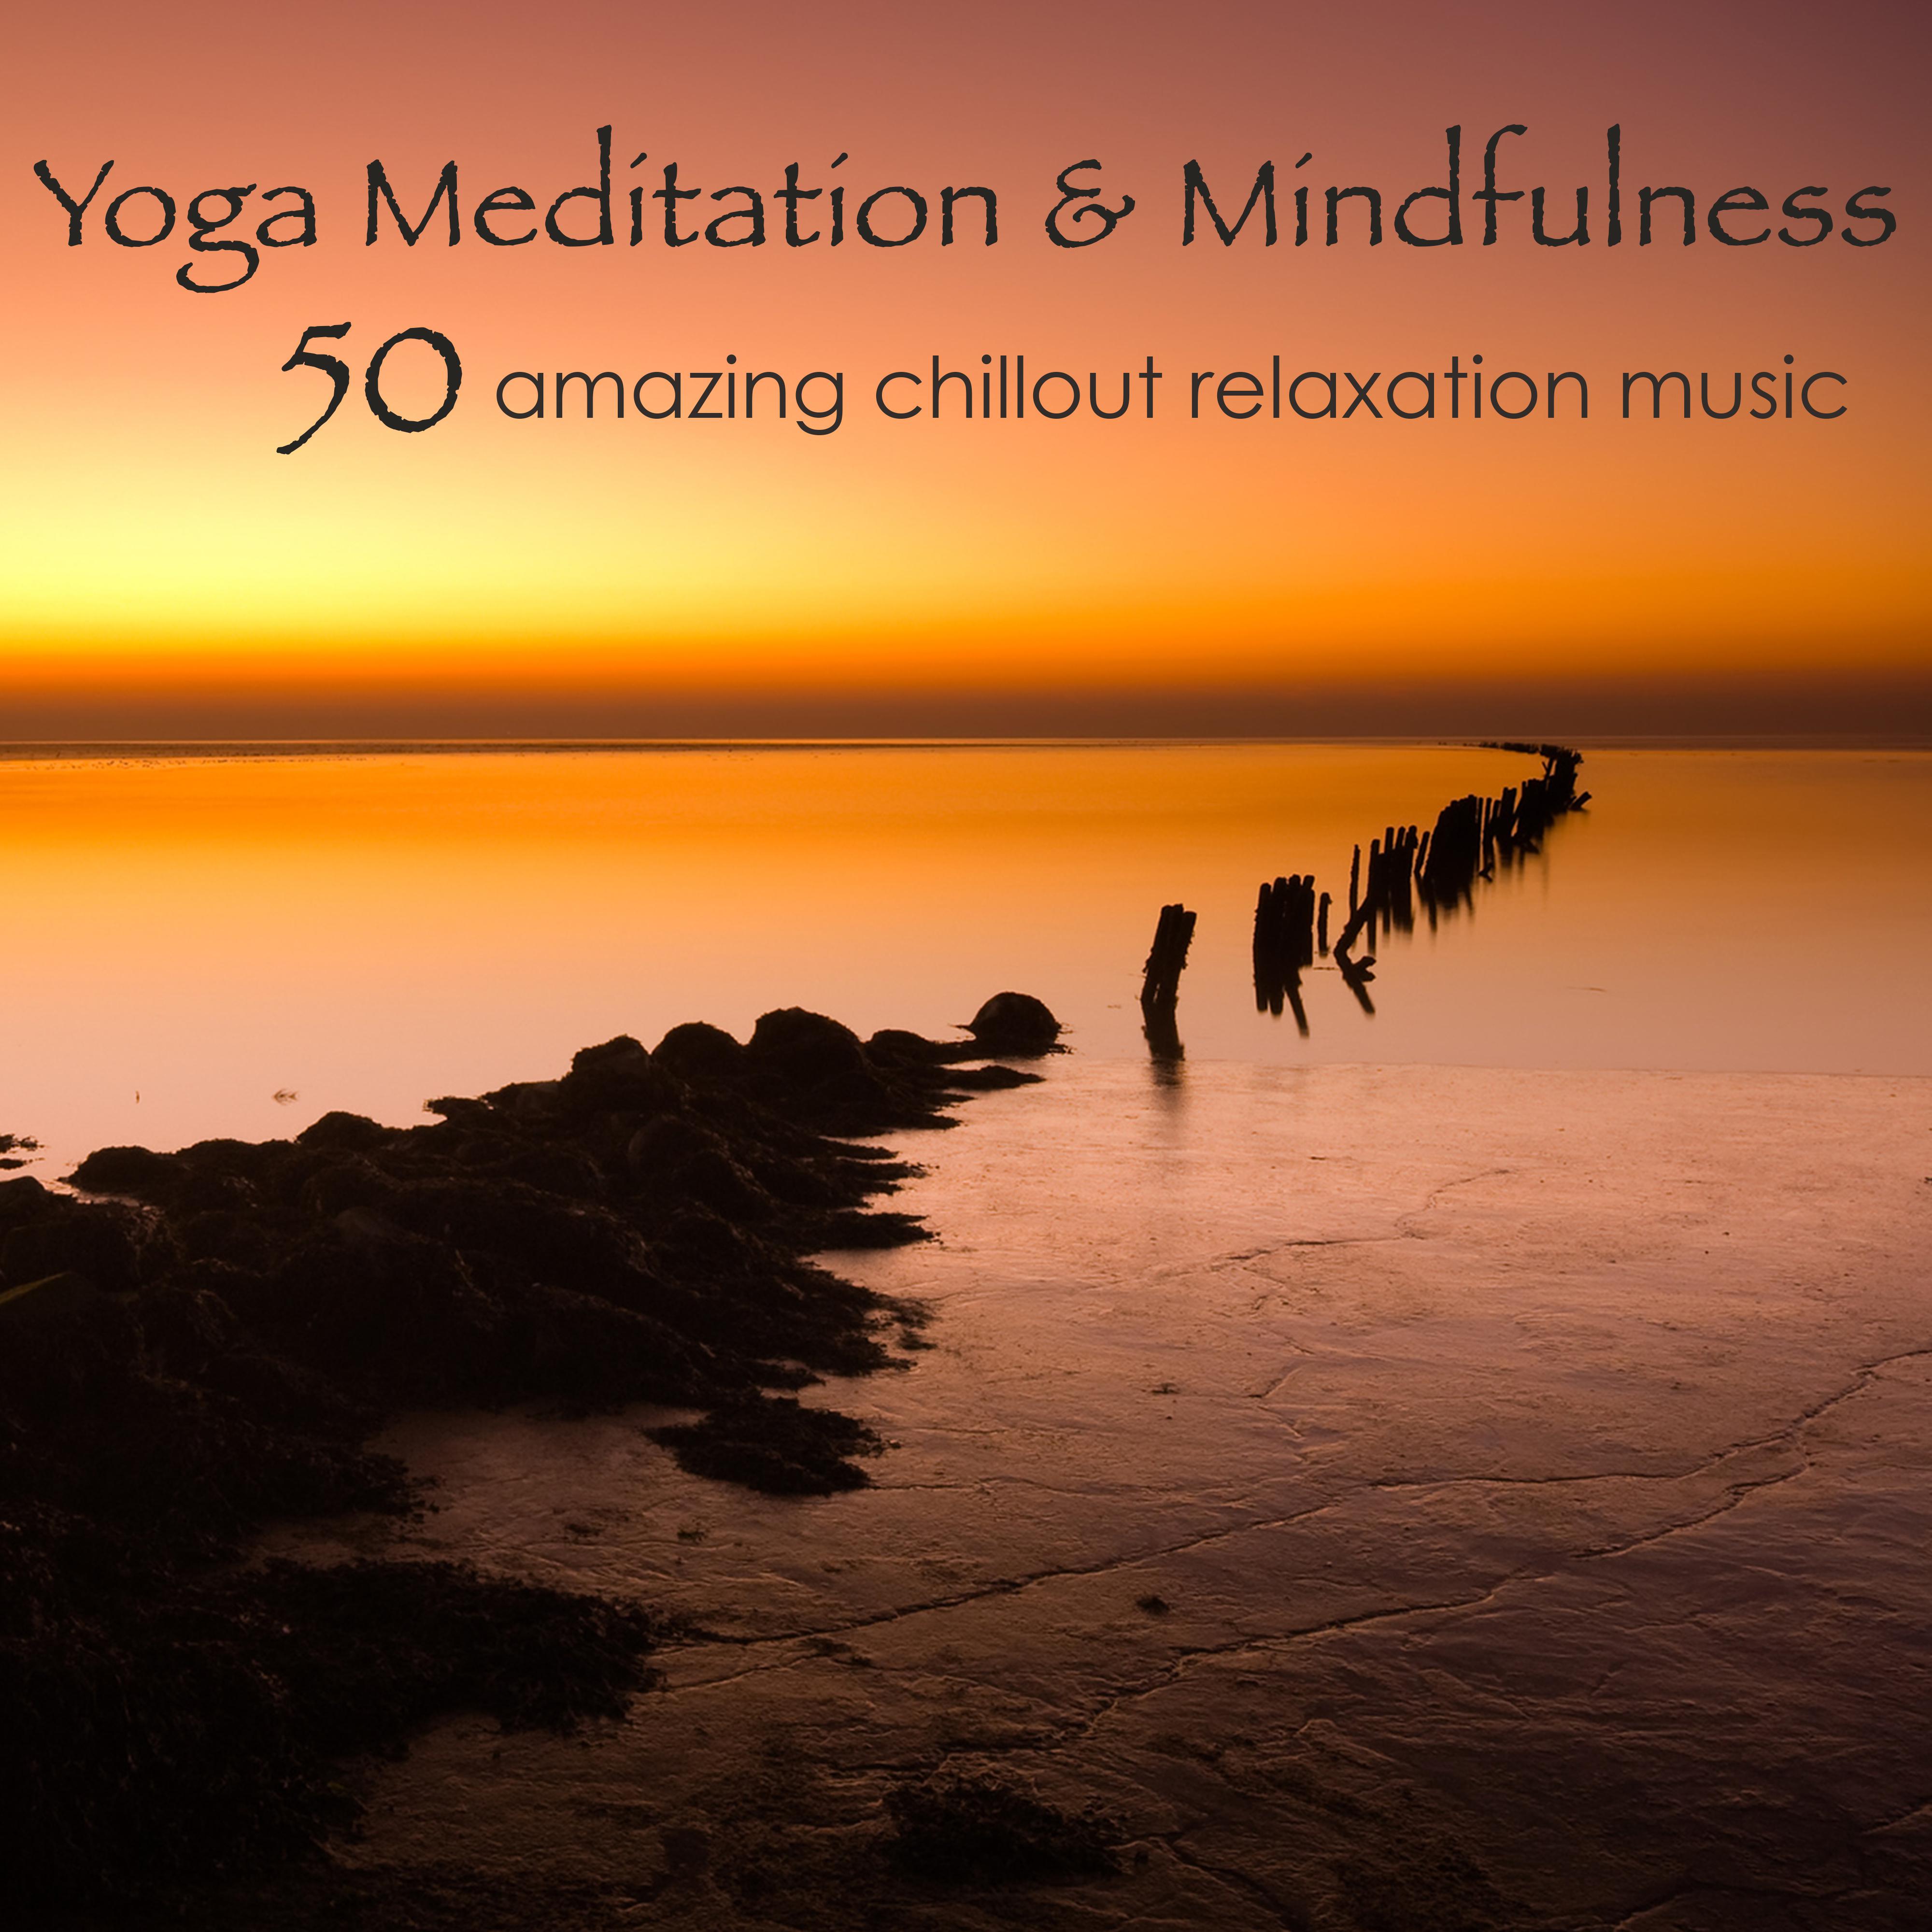 Yoga Meditation  Mindfulness  50 Amazing Chillout Relaxation Music for Meditation, Yoga, Relax  Sleep